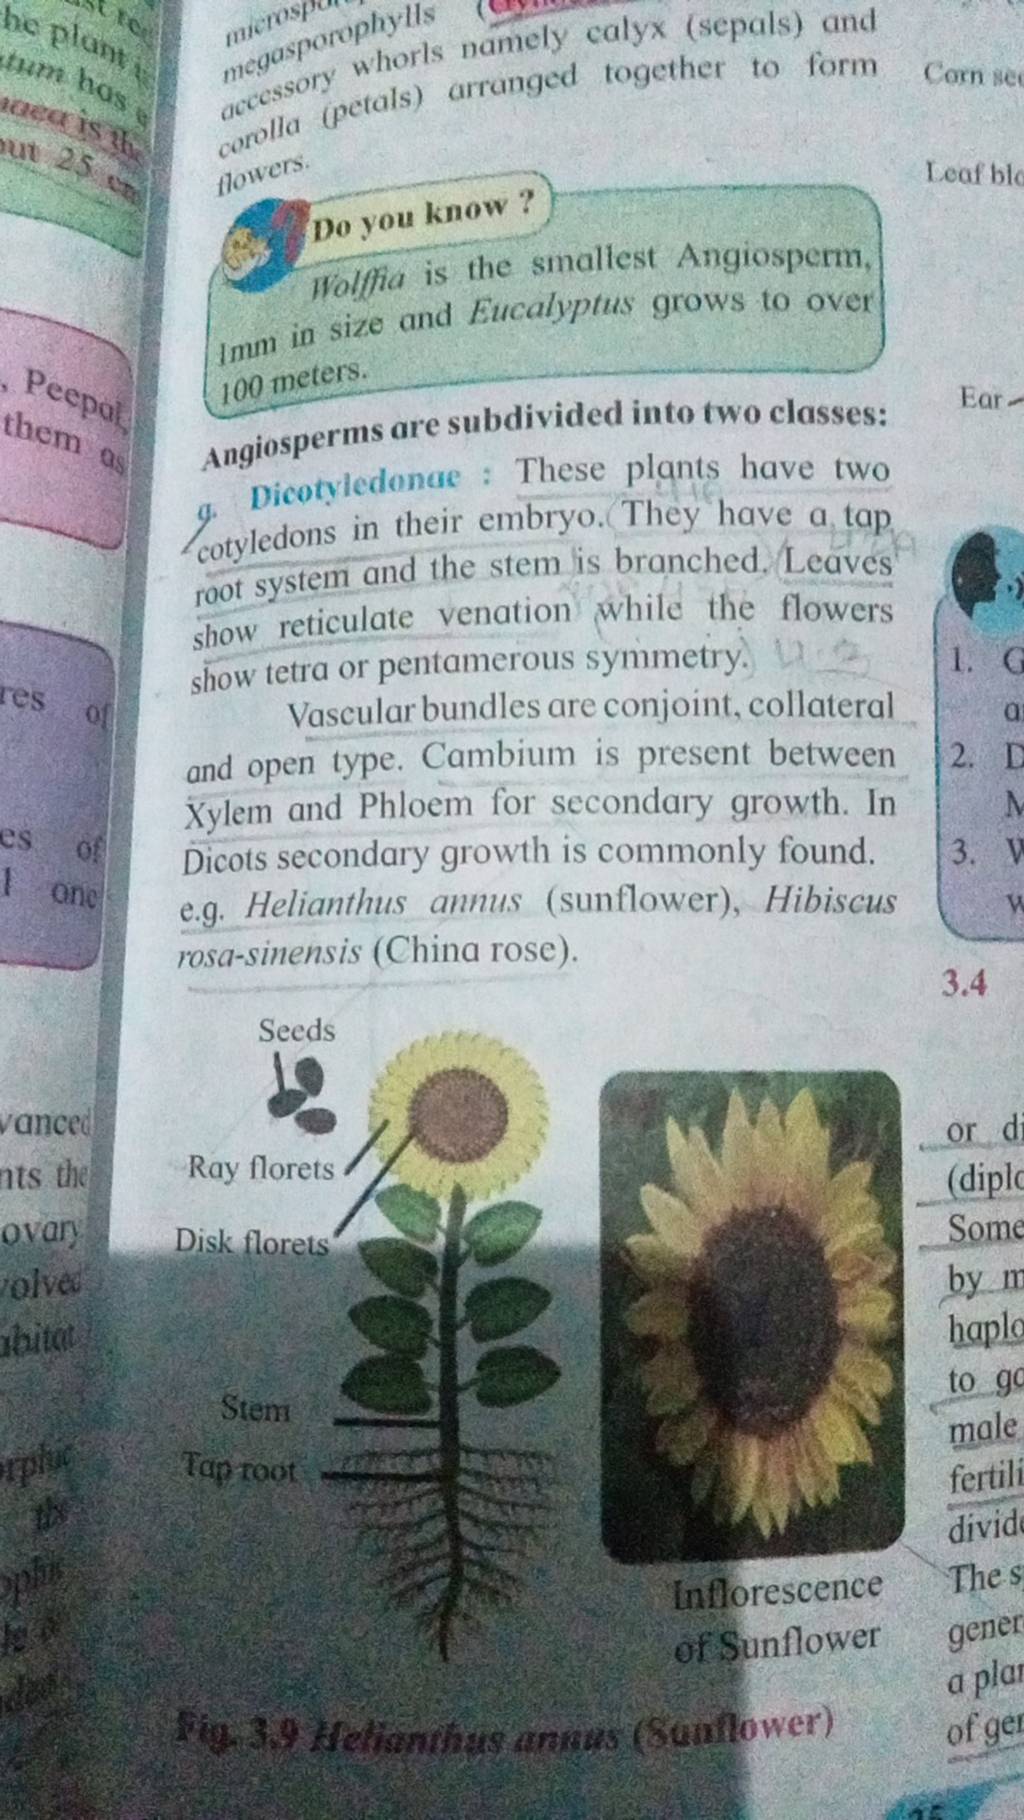 megasporophy namely calyx (sepals) and accessory (petals) arranged tog